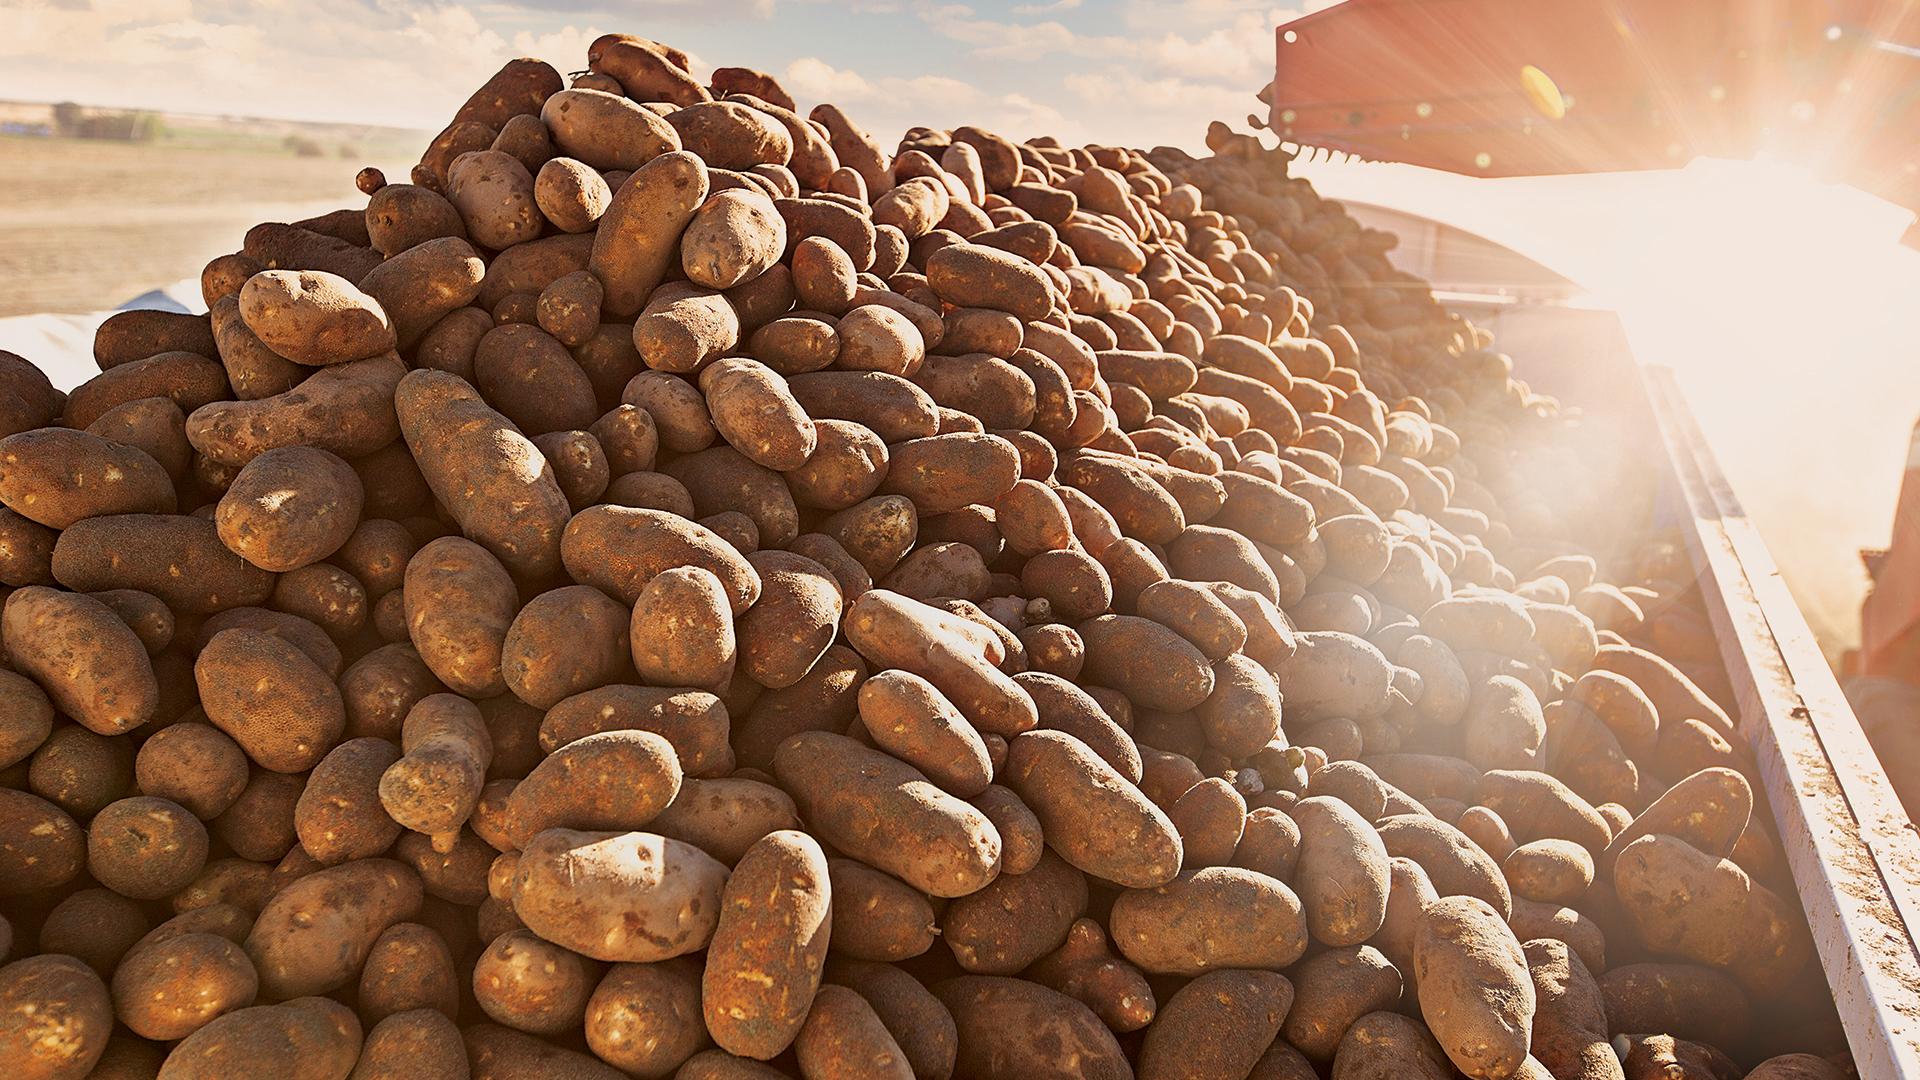 potato farm edit - PROBLEM POTATOES AT HARVEST | PART 1